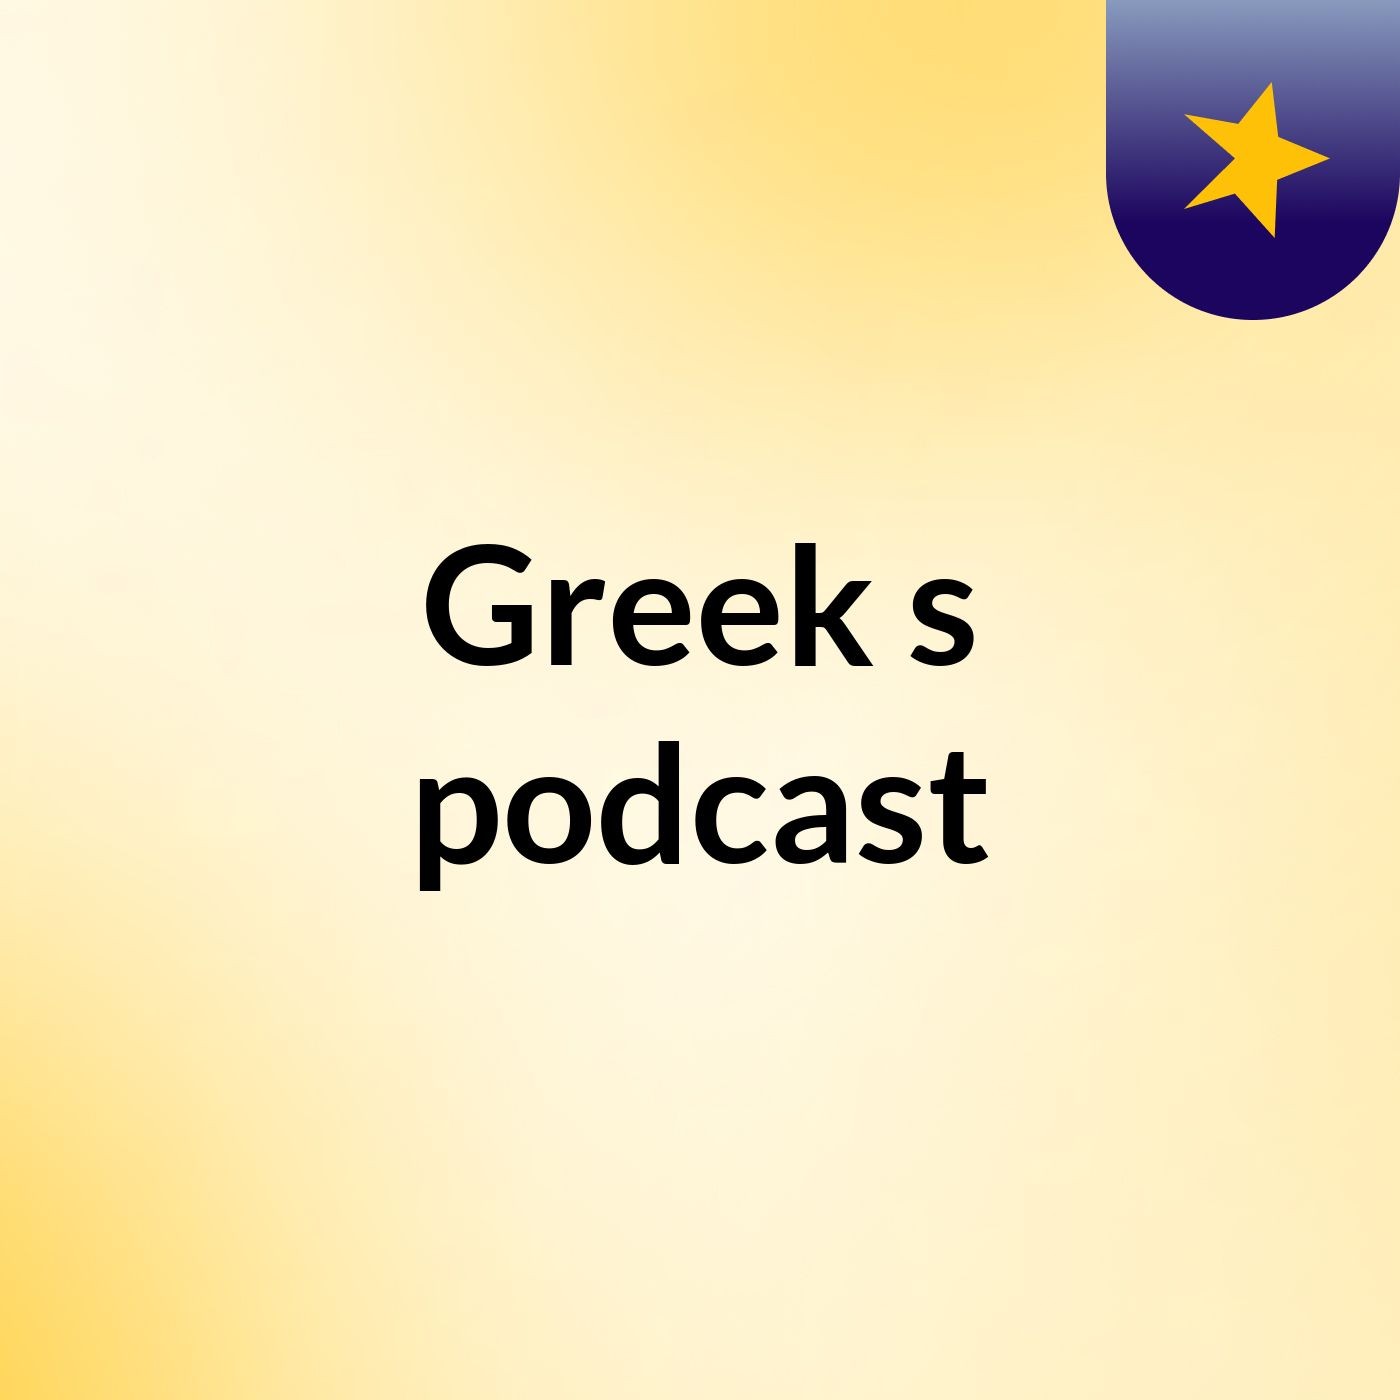 Episode 3 - Greek's podcast